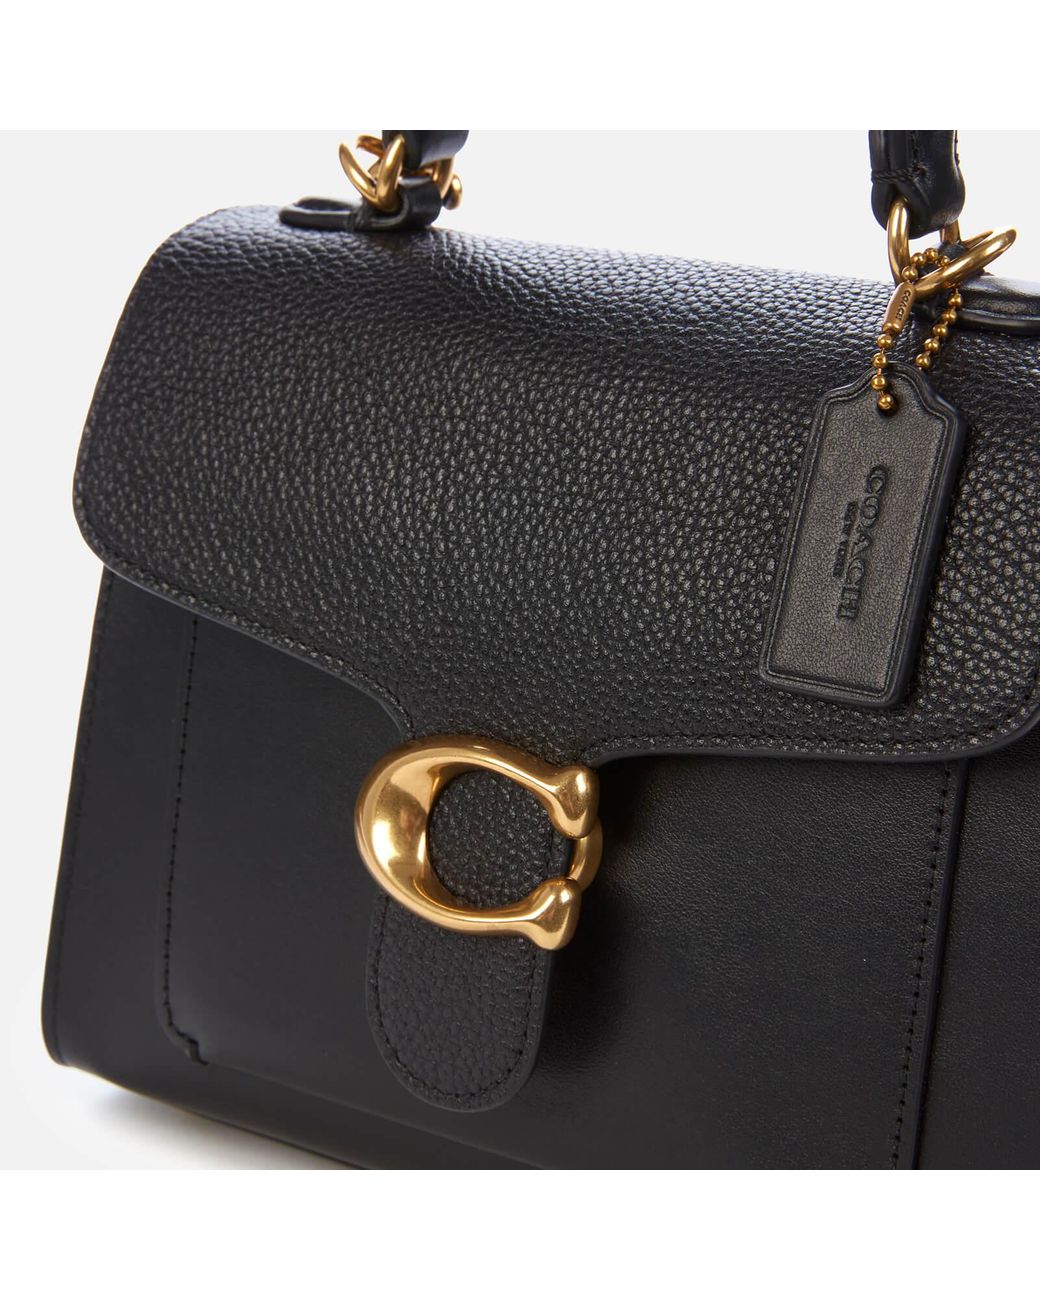 COACH Tabby Top Handle Bag in Black | Lyst Australia